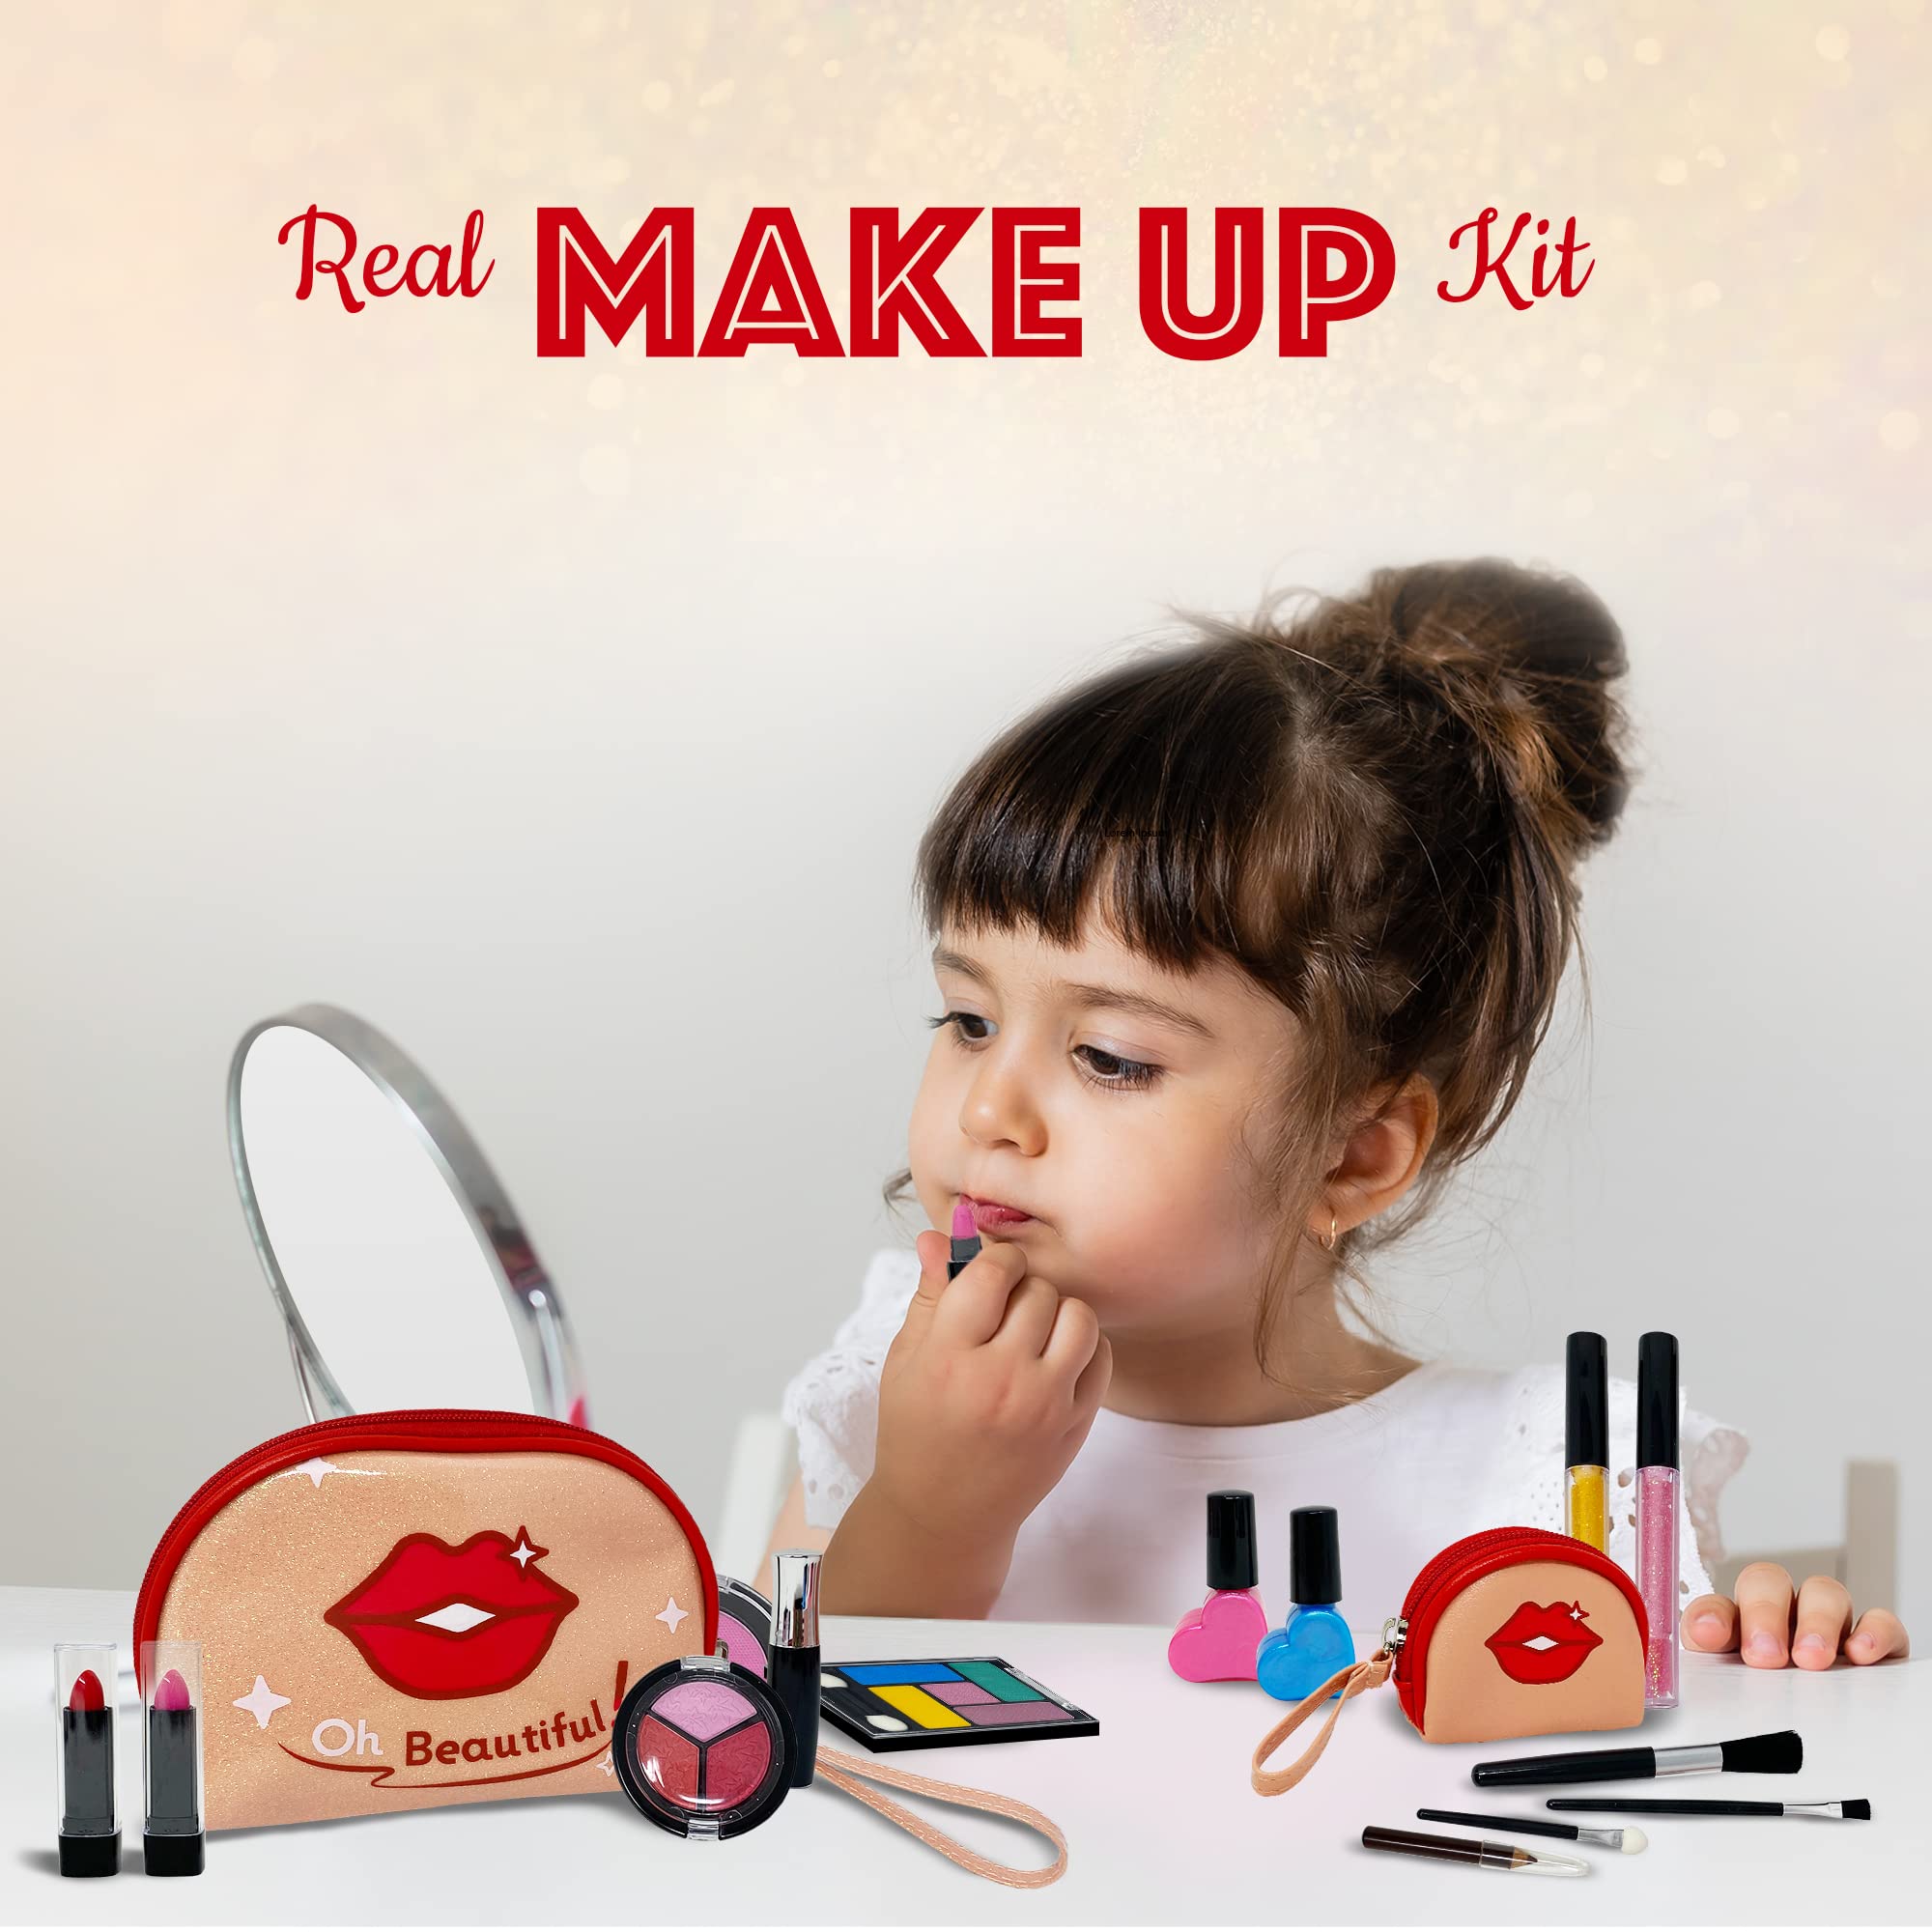 Kids Makeup Kit for Girl, Makeup for Kids, Little Girls Makeup Set, Play Makeup Kit for Girls, Toddler Makeup Kit with Kid Makeup for Girls, Accessories, Cosmetic Bag, Toy Makeup Set for Girls 3+